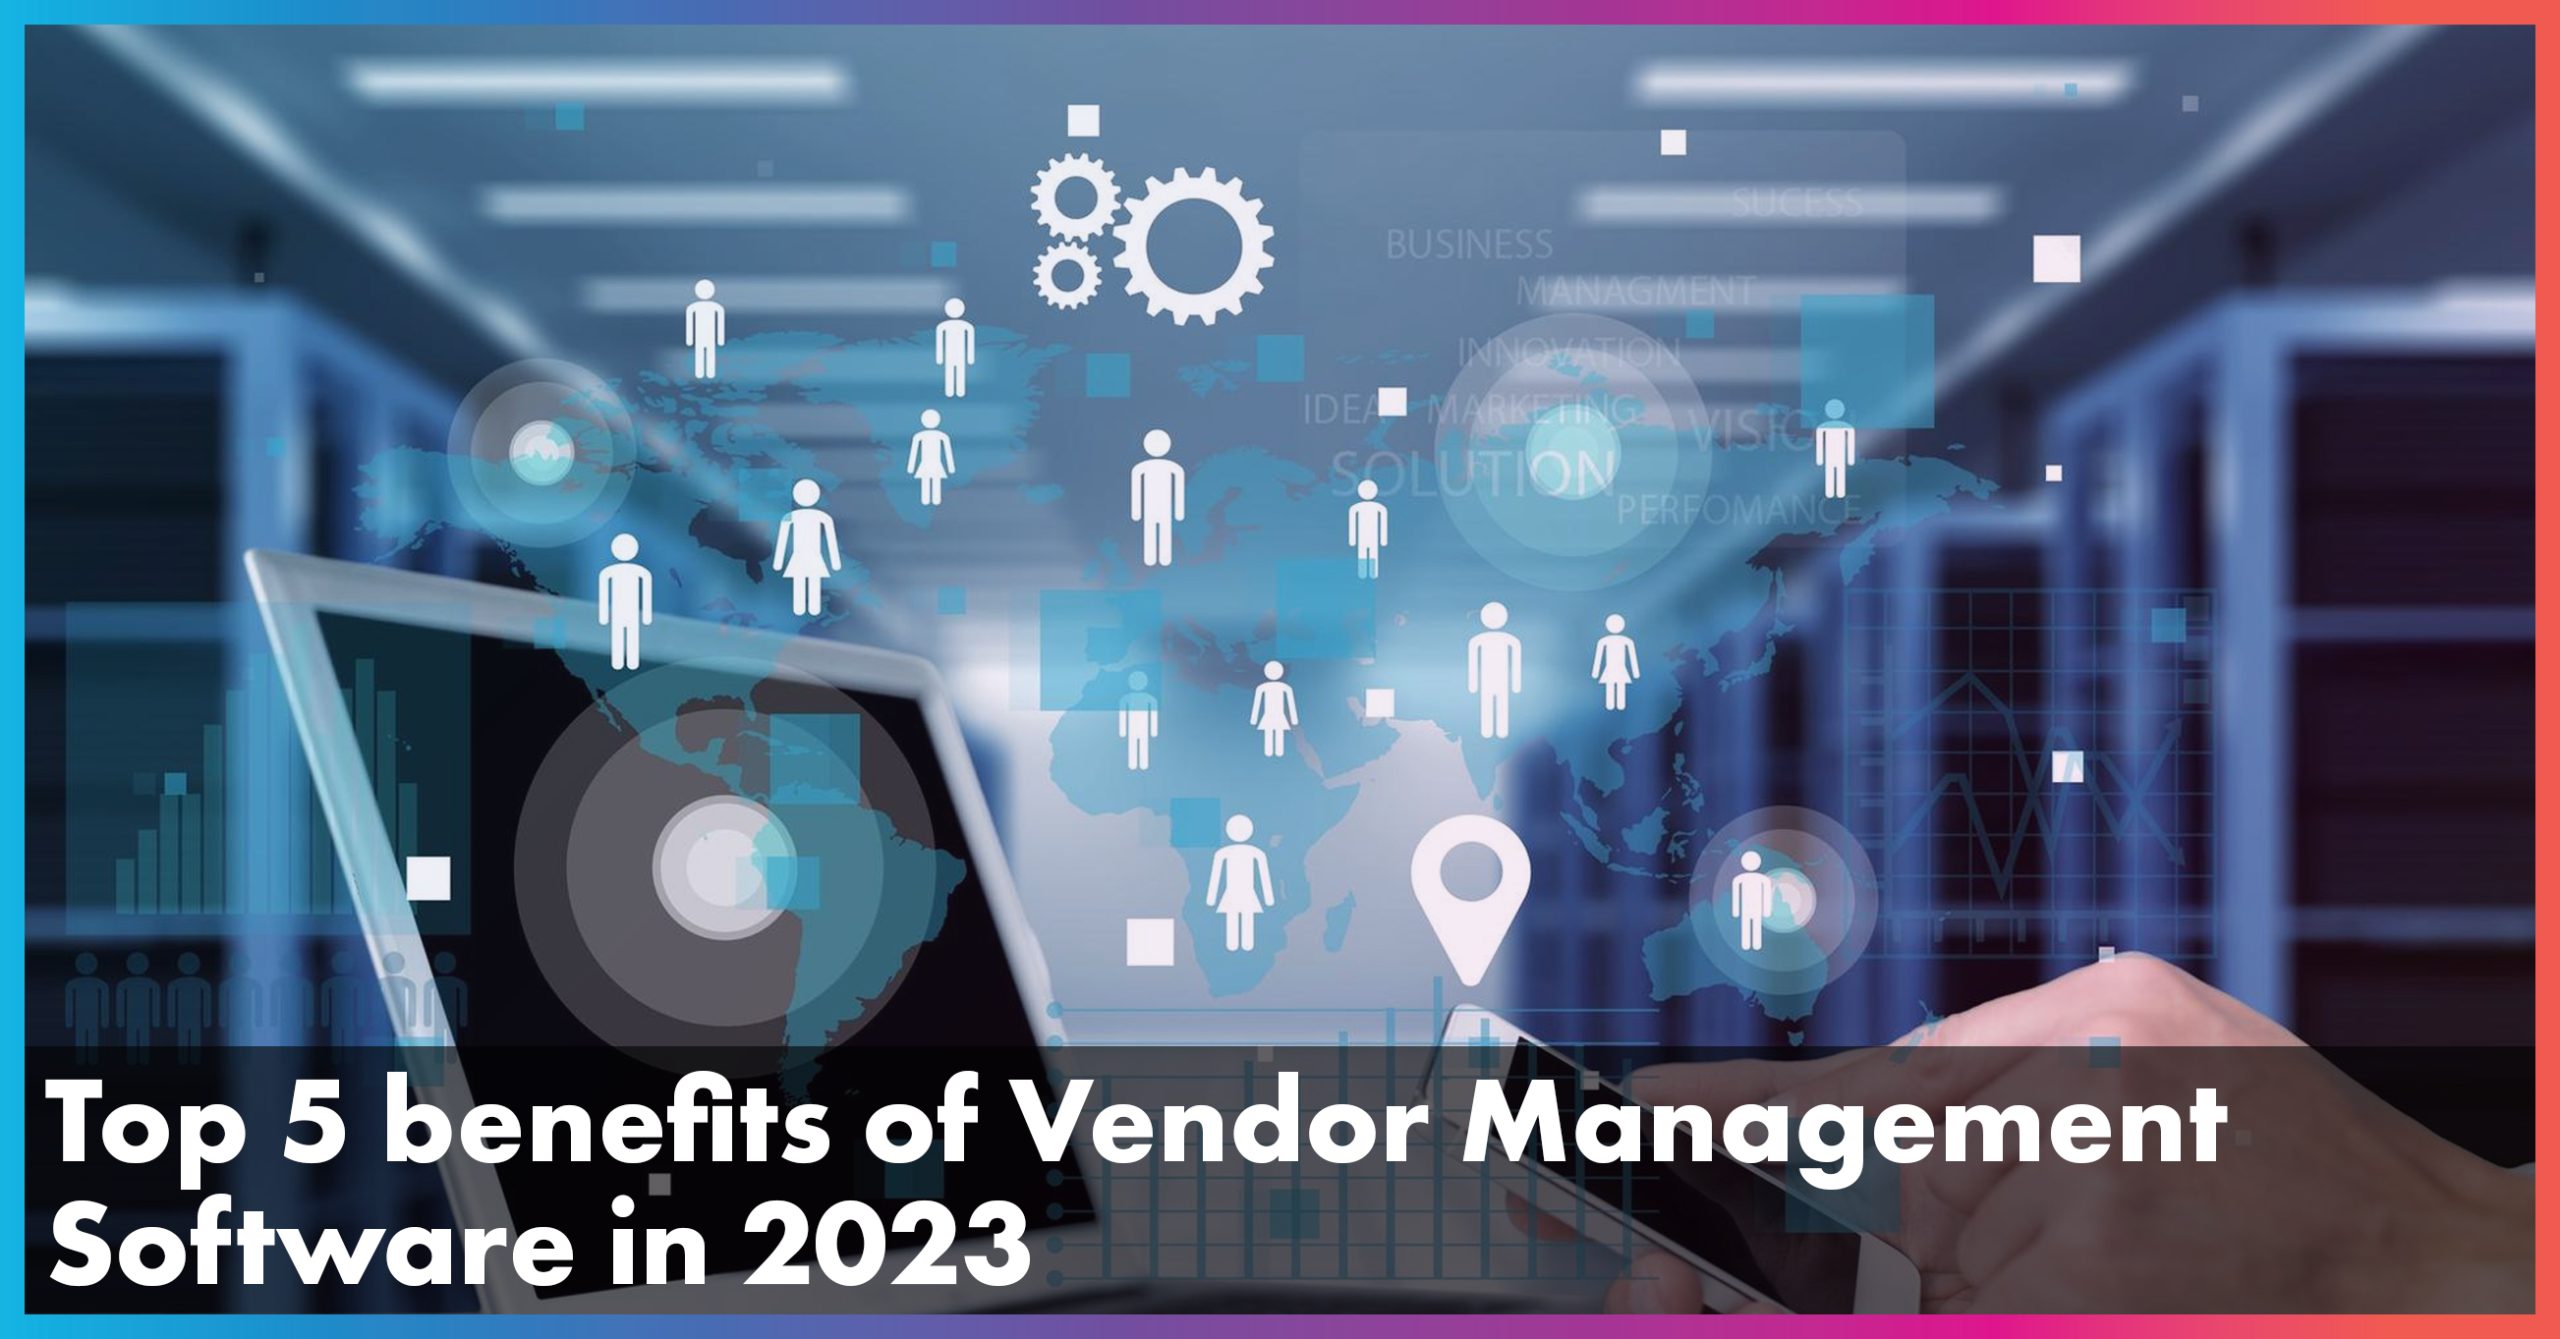 Top 5 benefits of Vendor Management Software in 2023